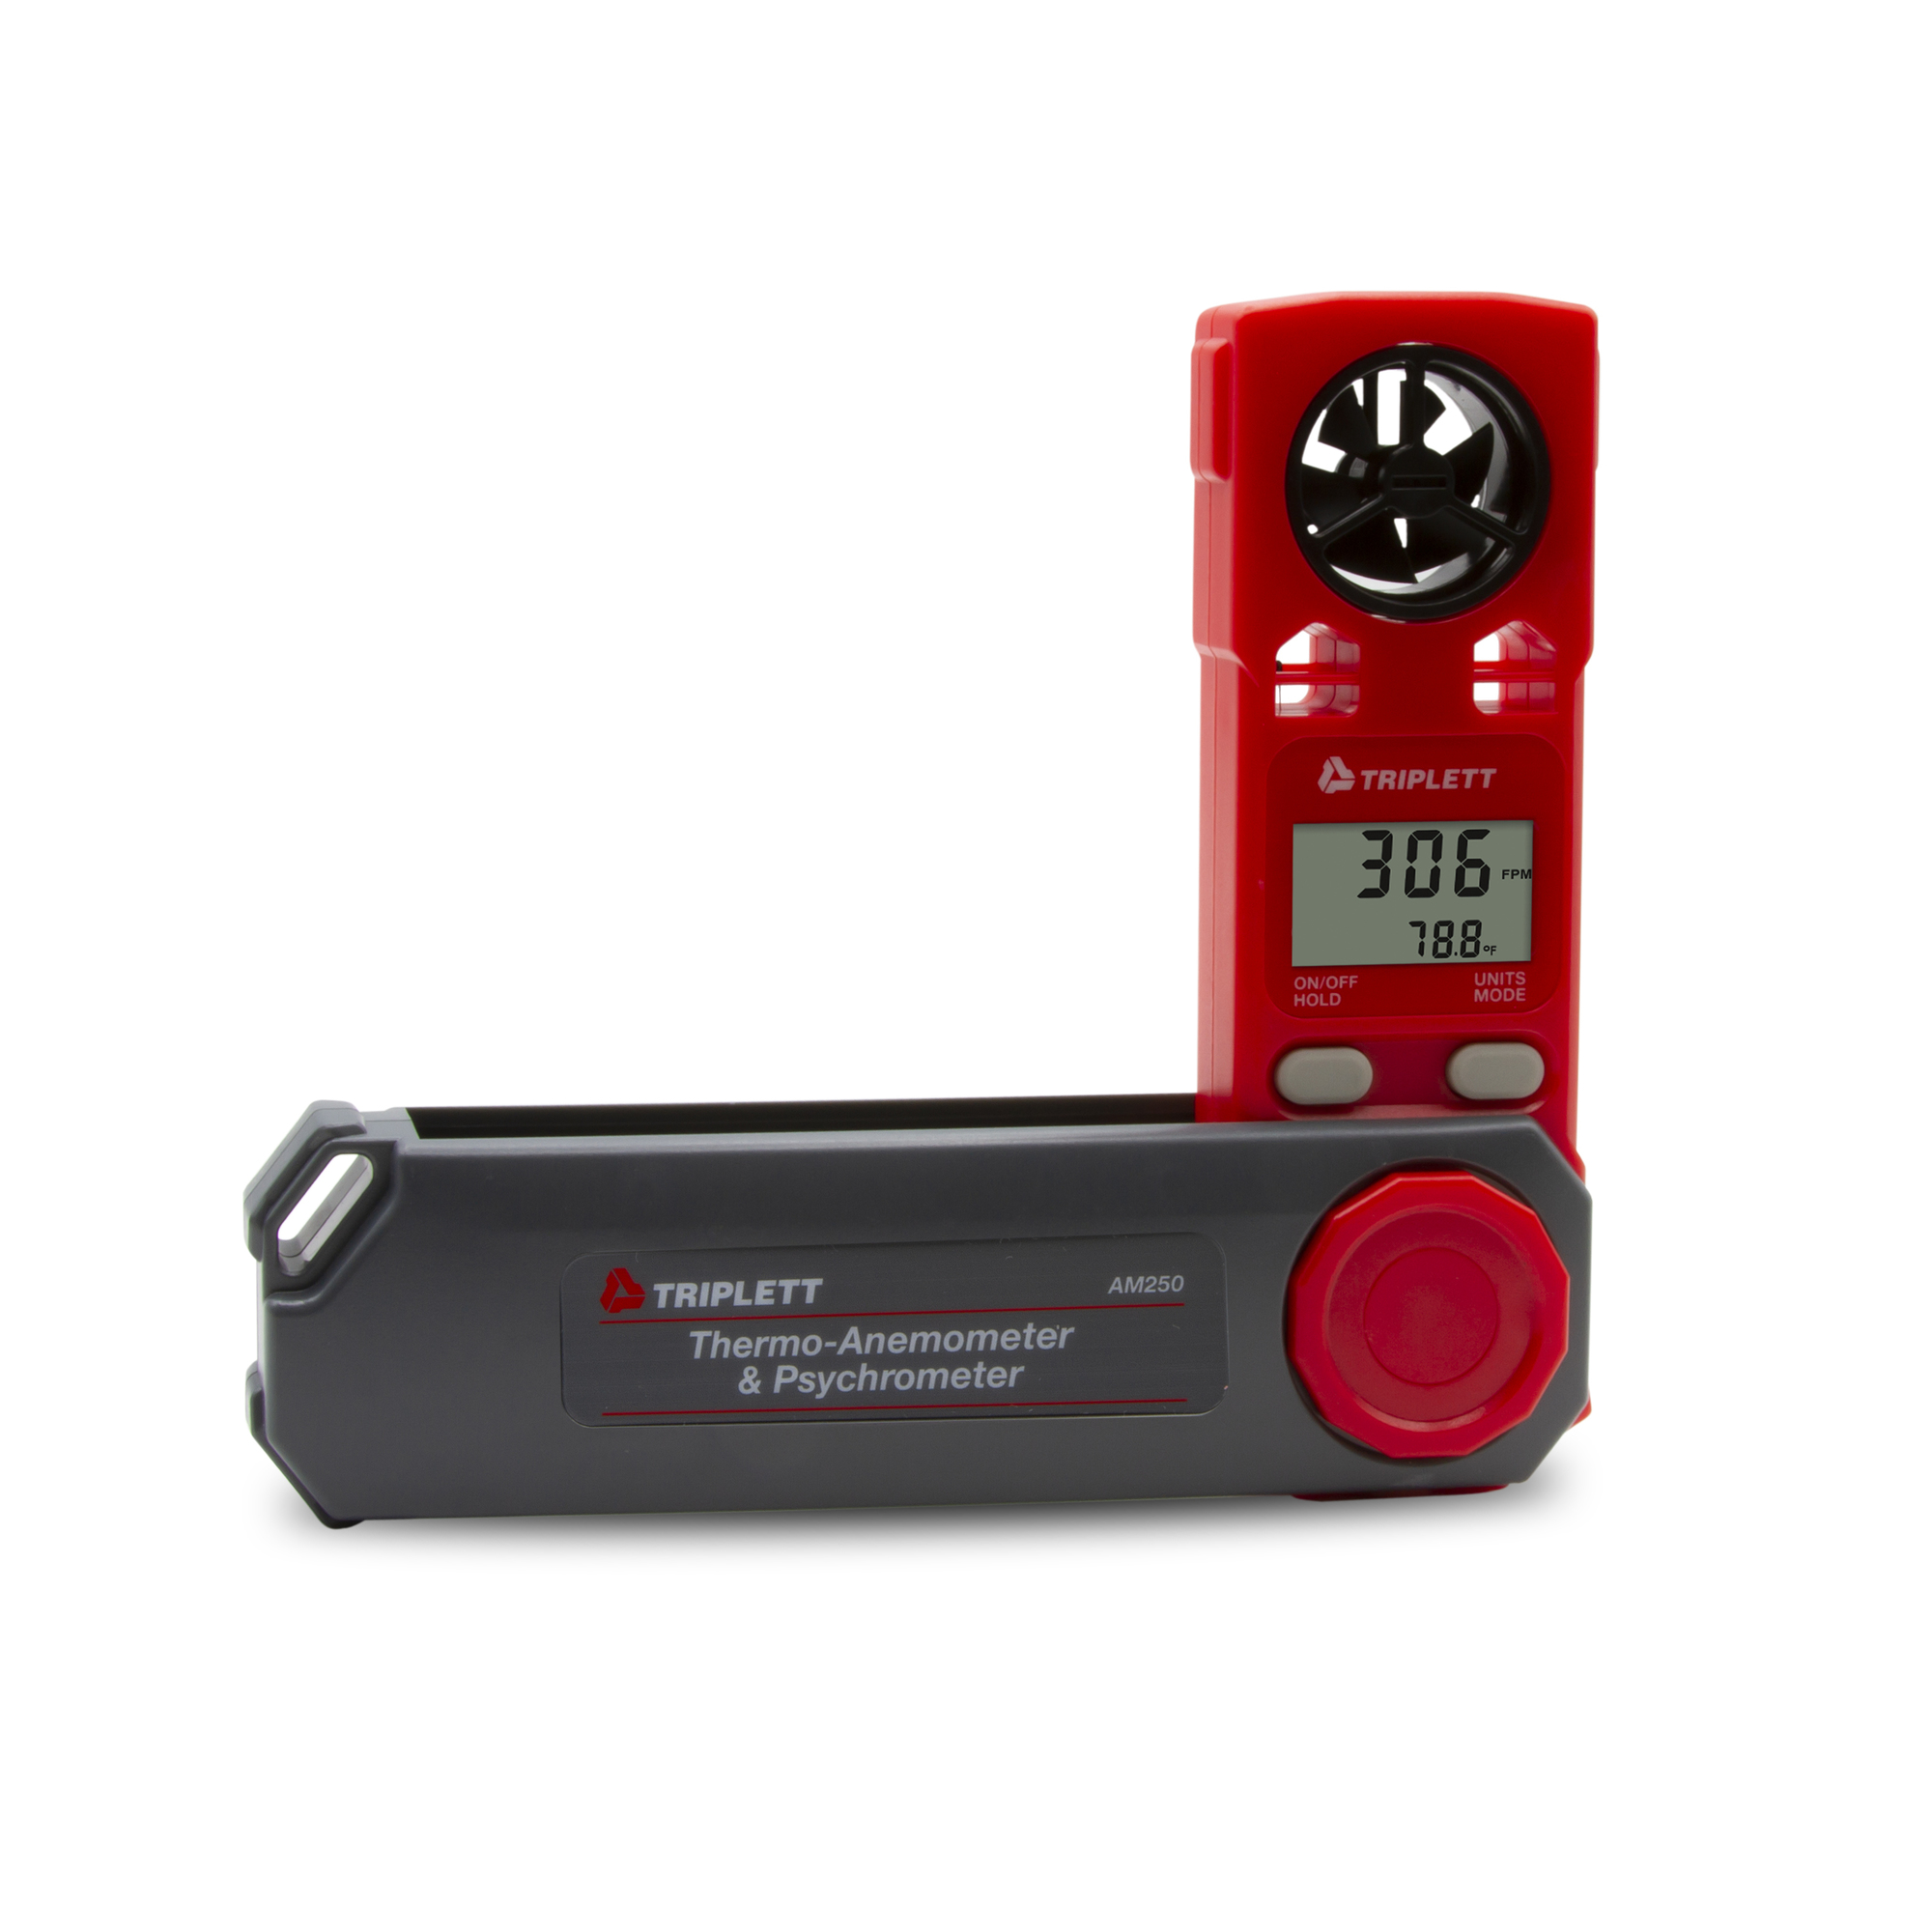 Triplett, Pocket Thermo-Anemometer + Humidity, Model AM250